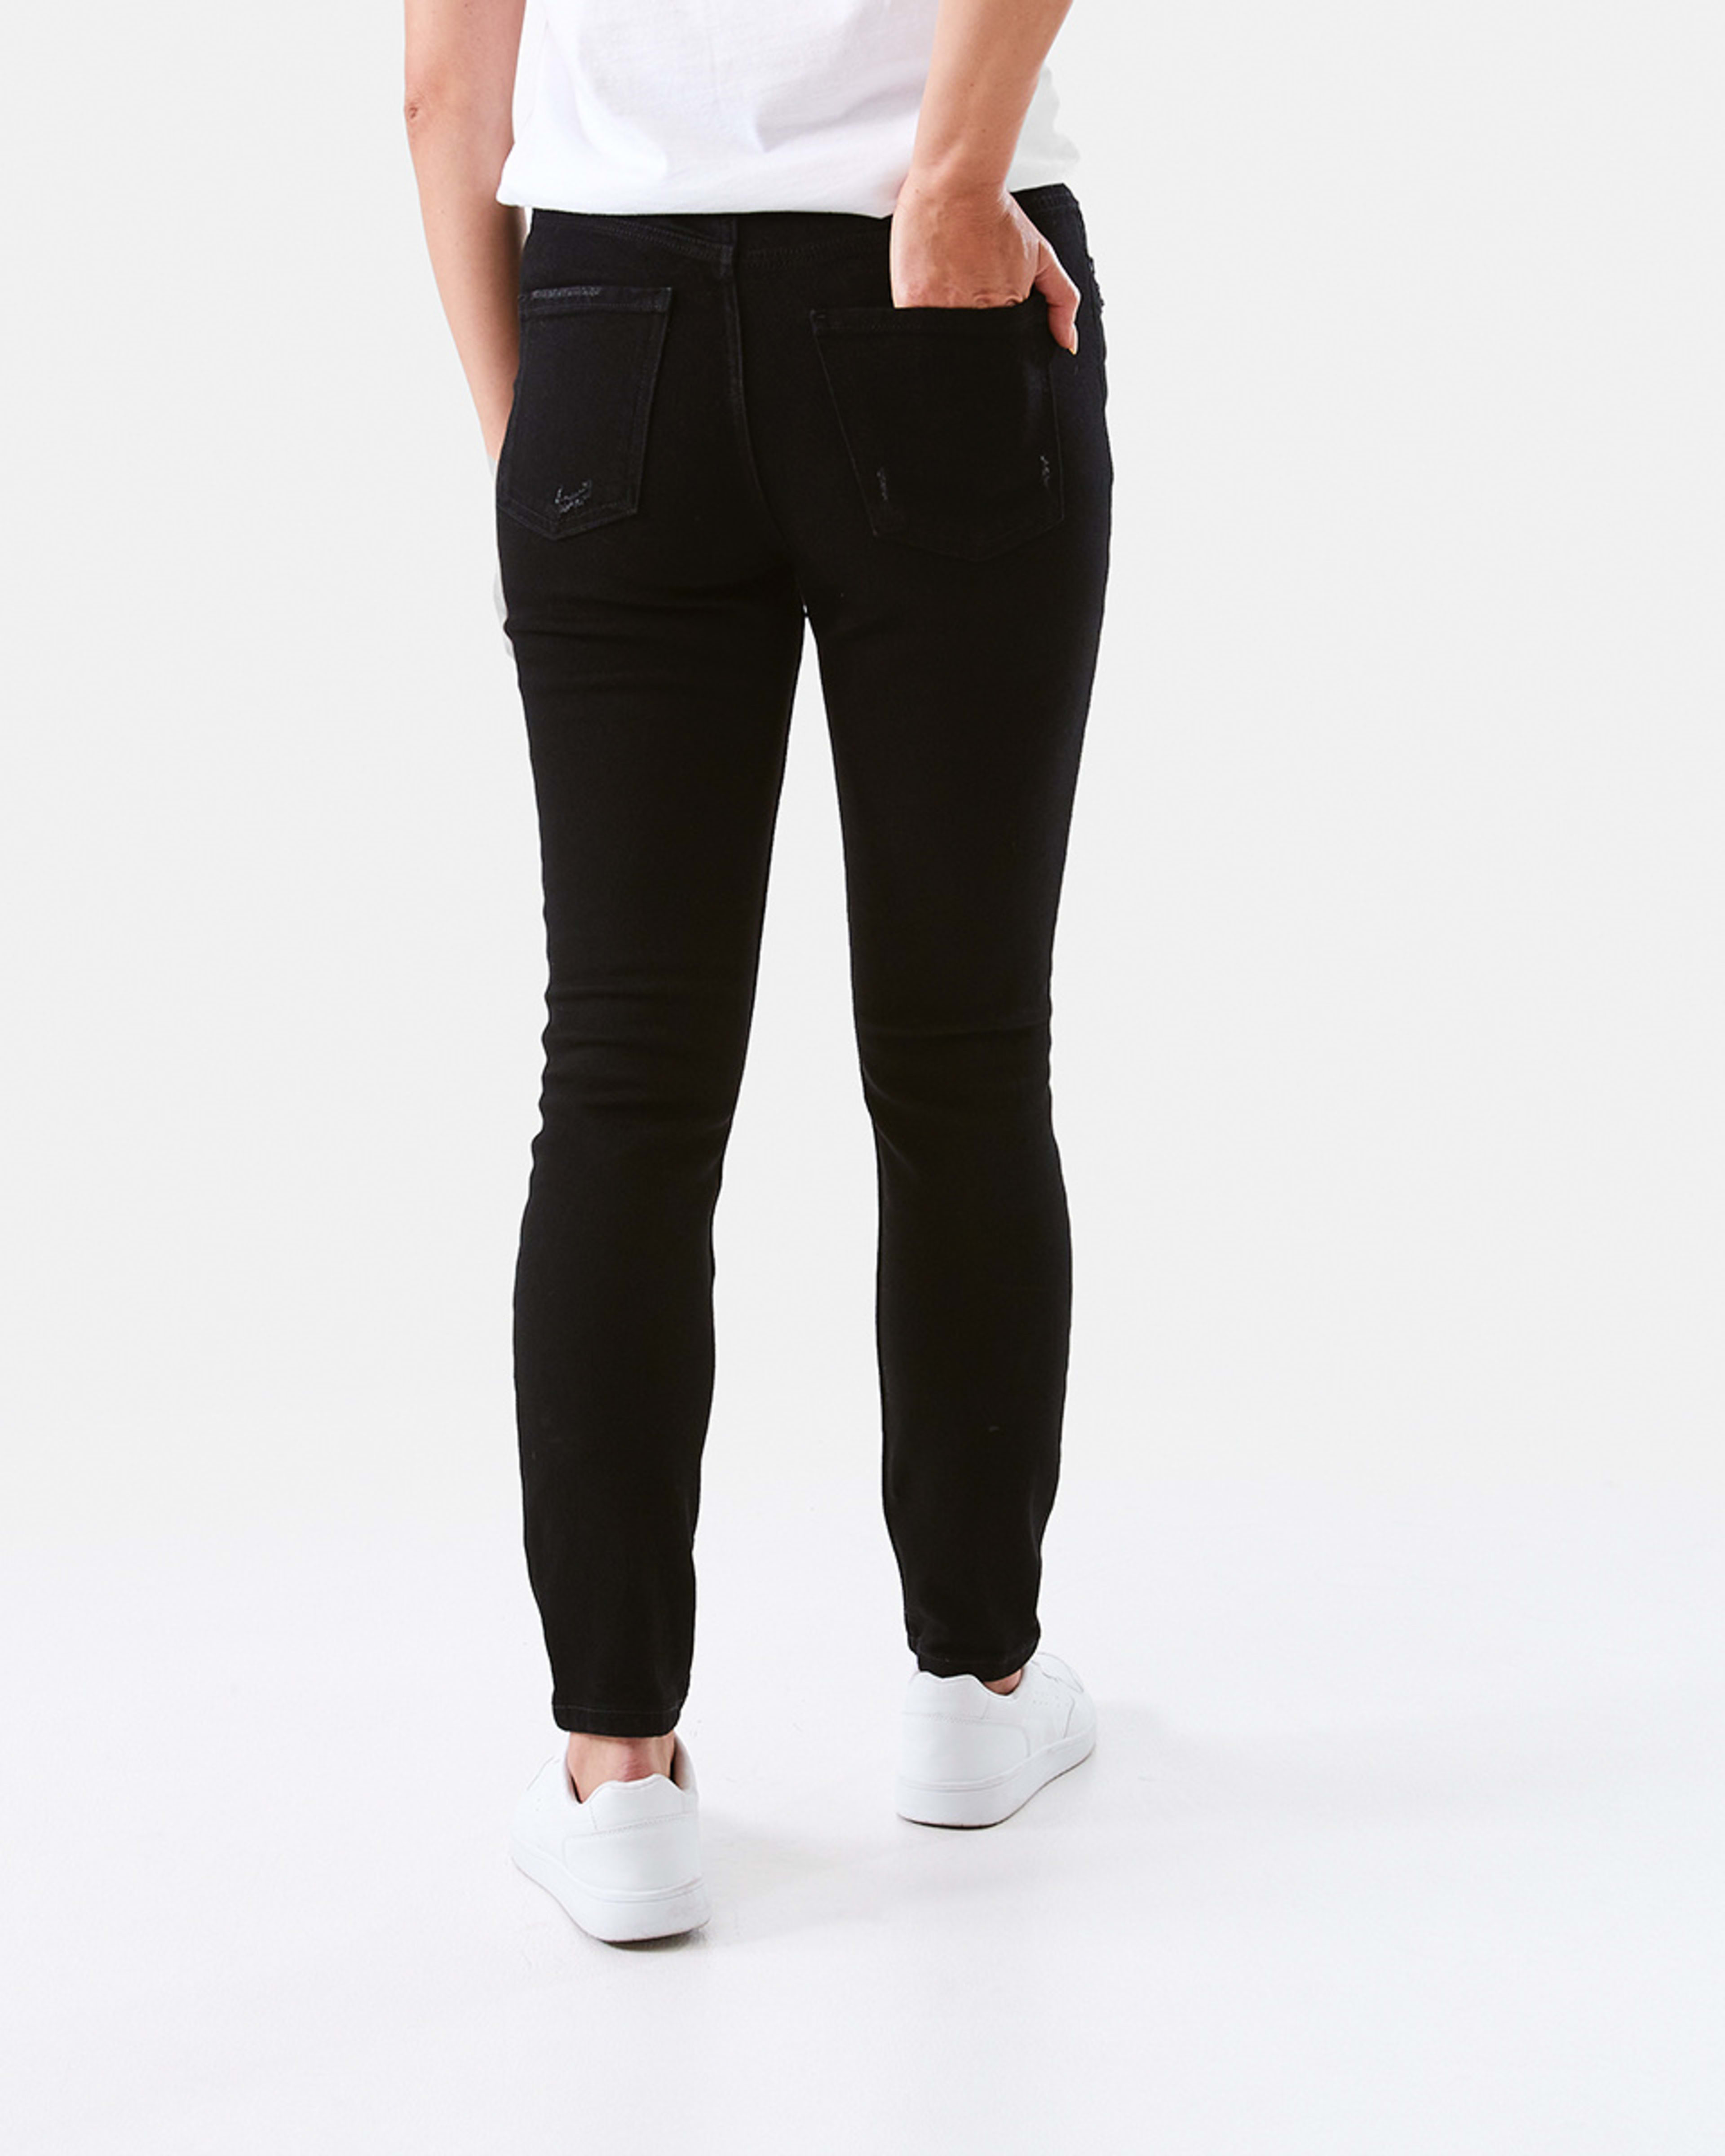 Distressed Skinny Jeans - Kmart